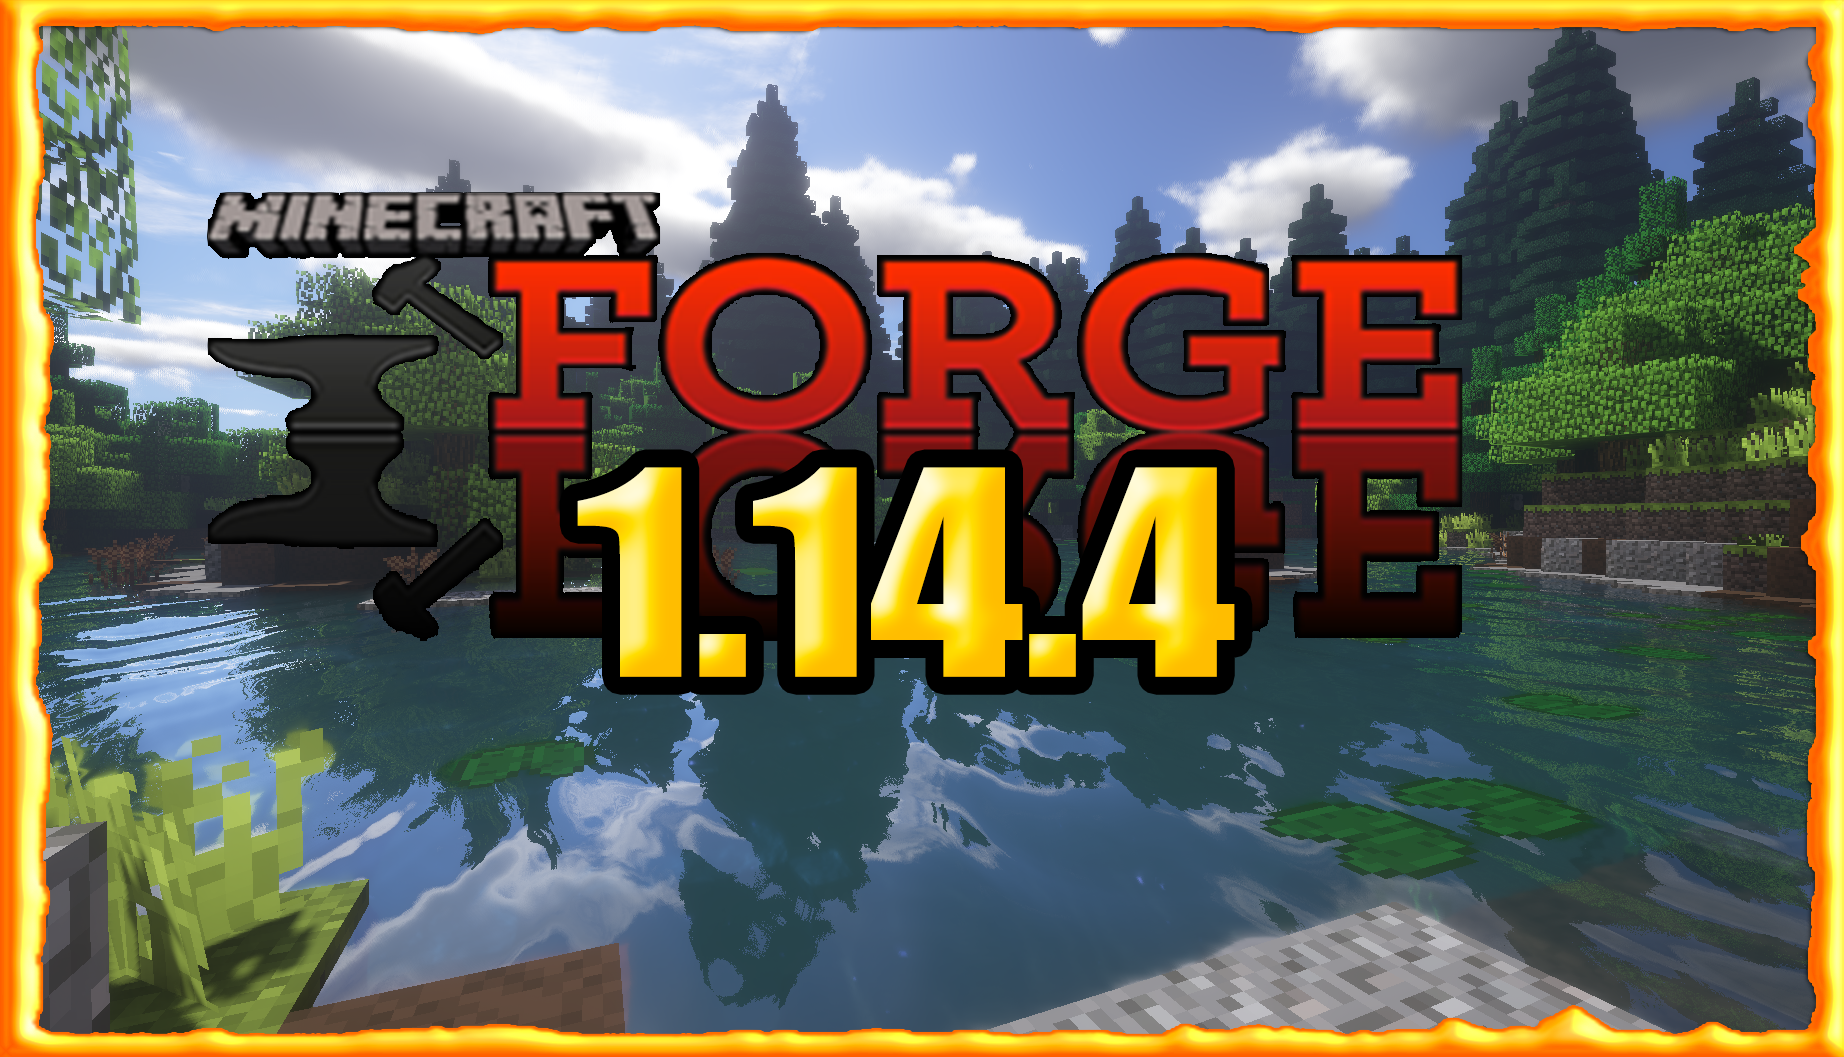 Фордж 1.14.4. Новая версия Forge. Обложка Curse Forge. Сайт Forge майнкрафт взломали. Curse forge 1.20 1